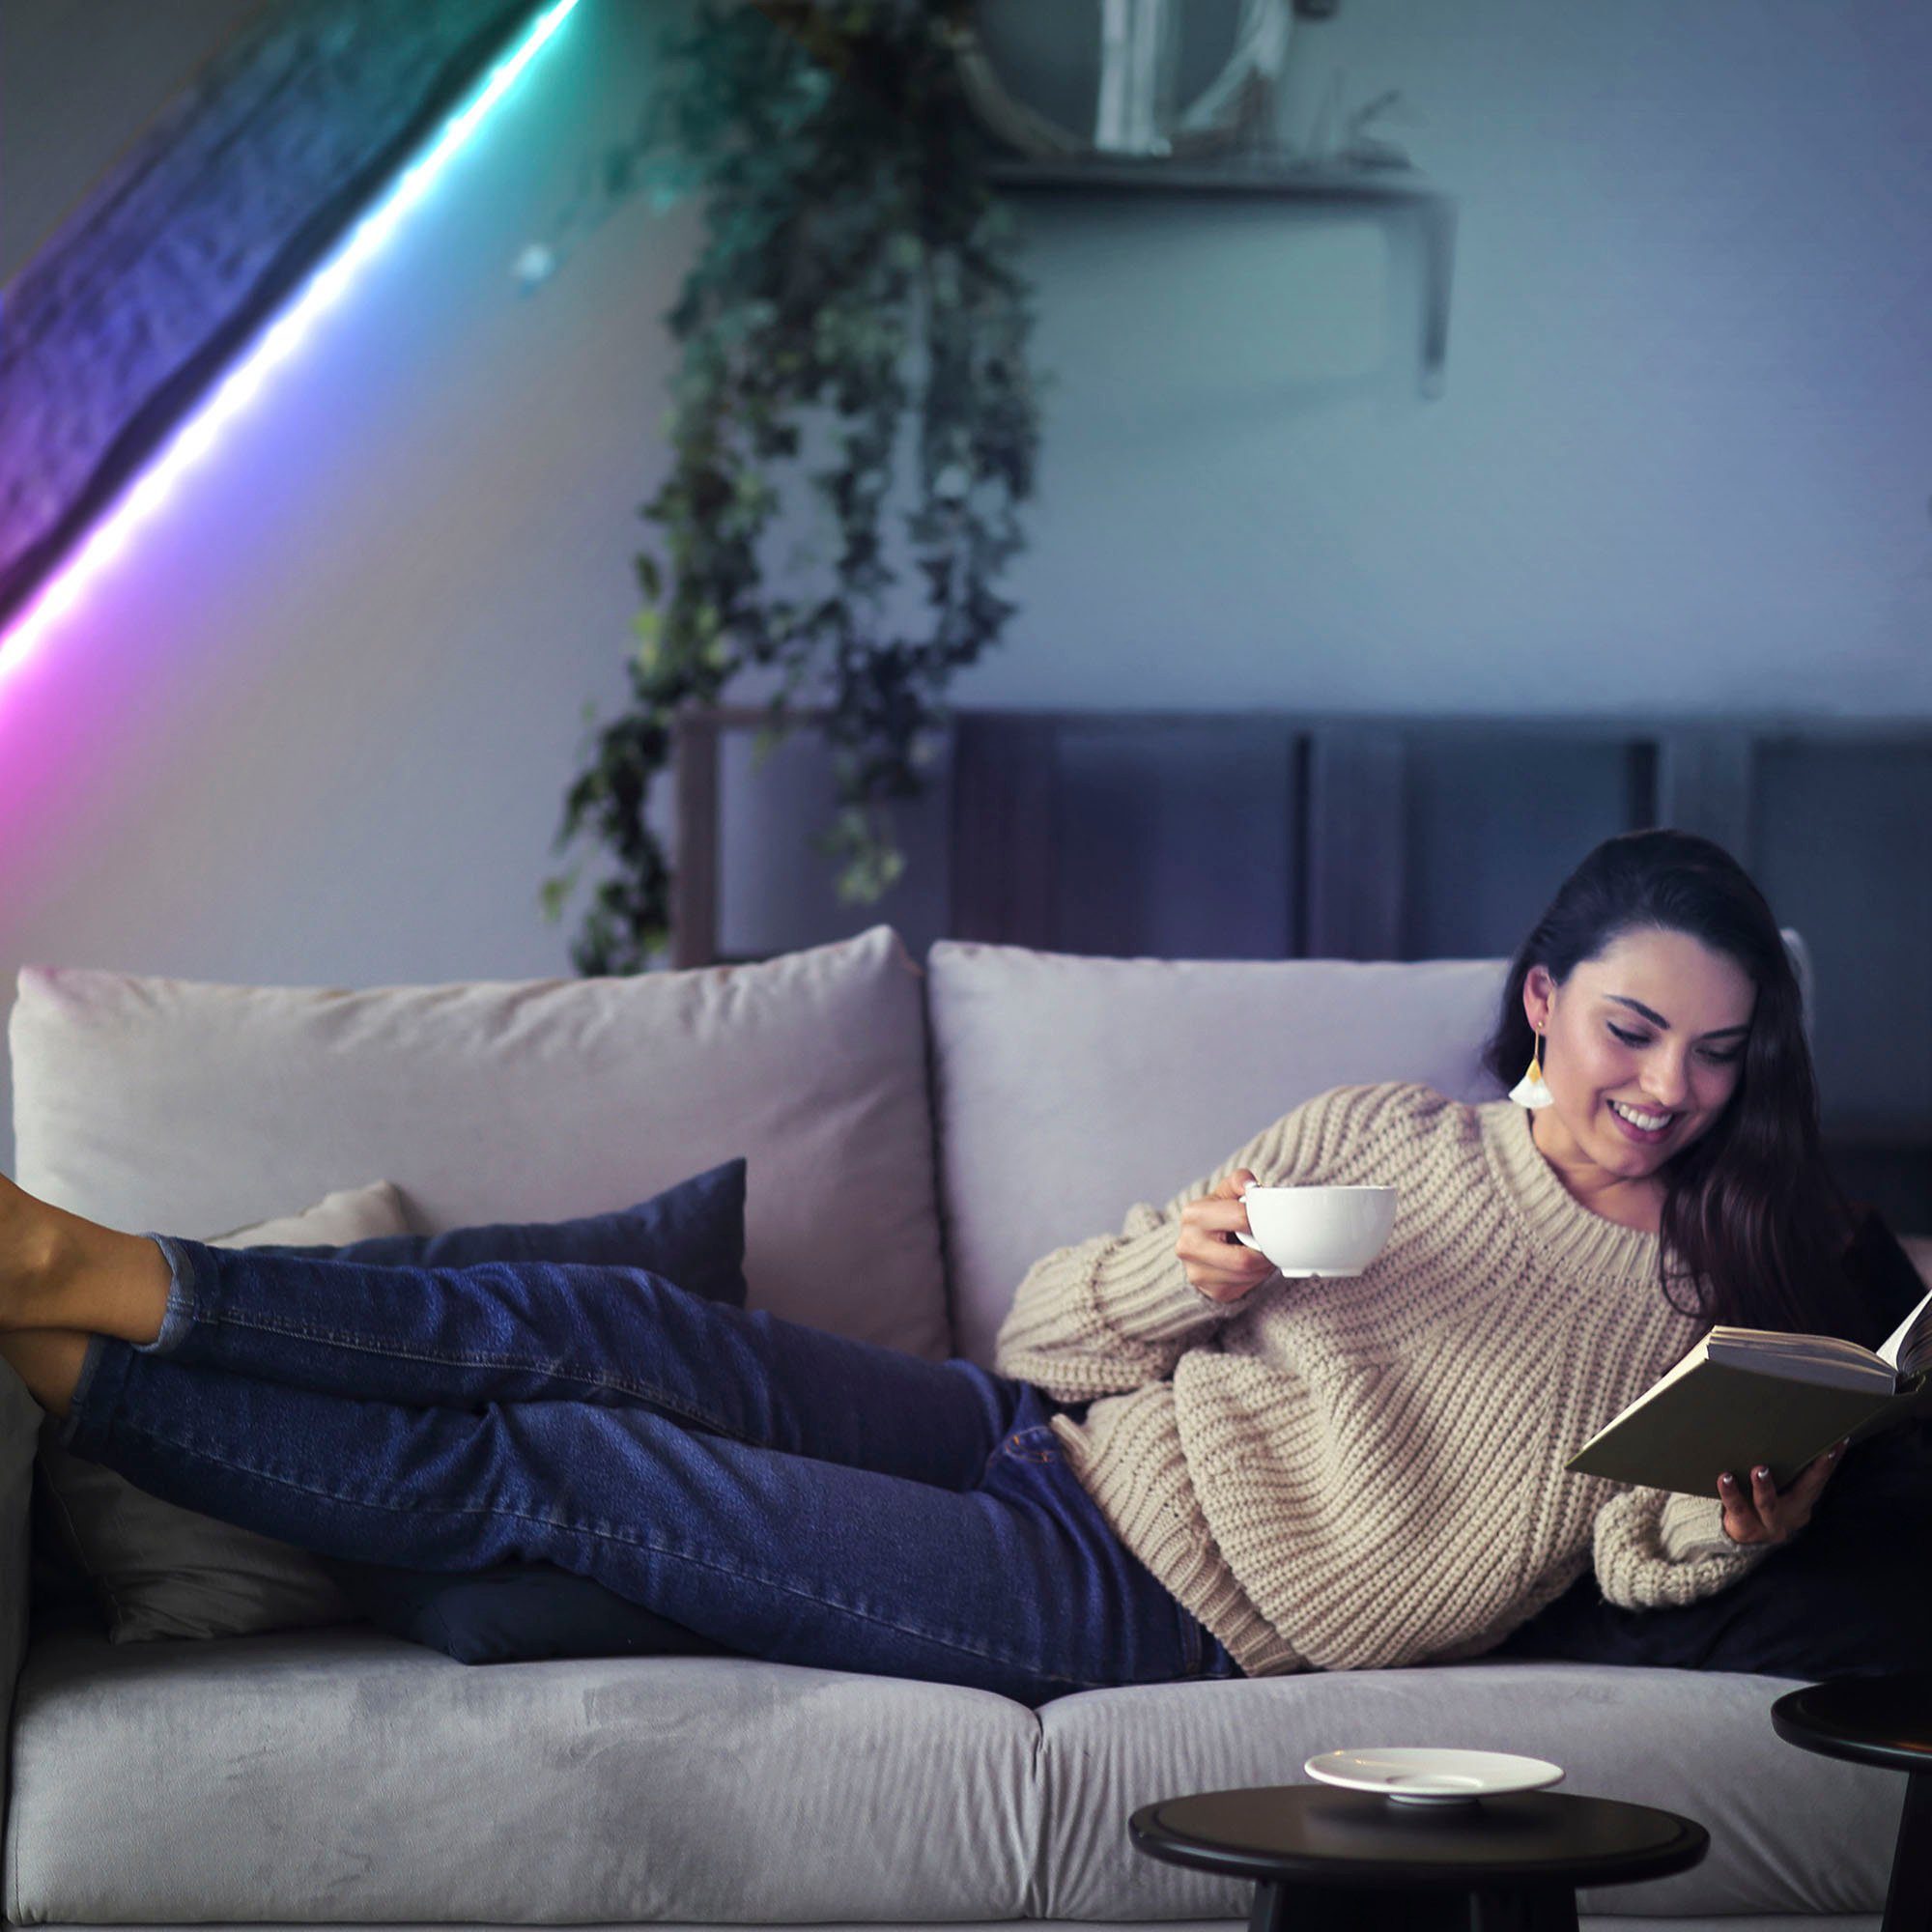 B.K.Licht LED-Streifen Wifi RGBIC, Selbstklebend mit 150-flammig, LED Lichtleiste, Band, Musiksensor, smartes